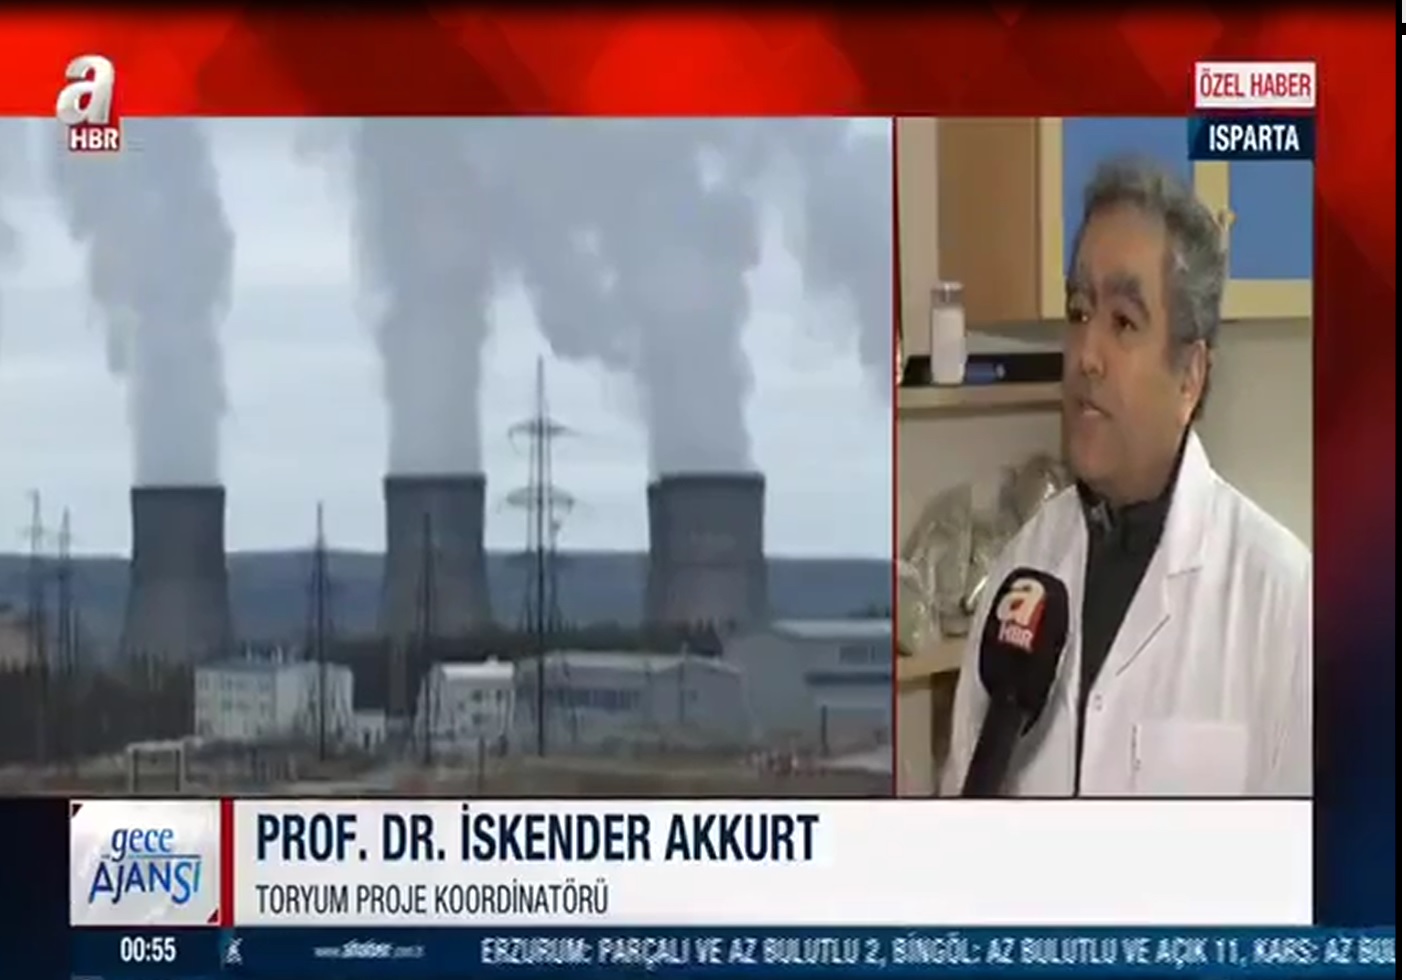 Prof.Dr. İskender AKKURT A haber kanalında Toryumu anlattı